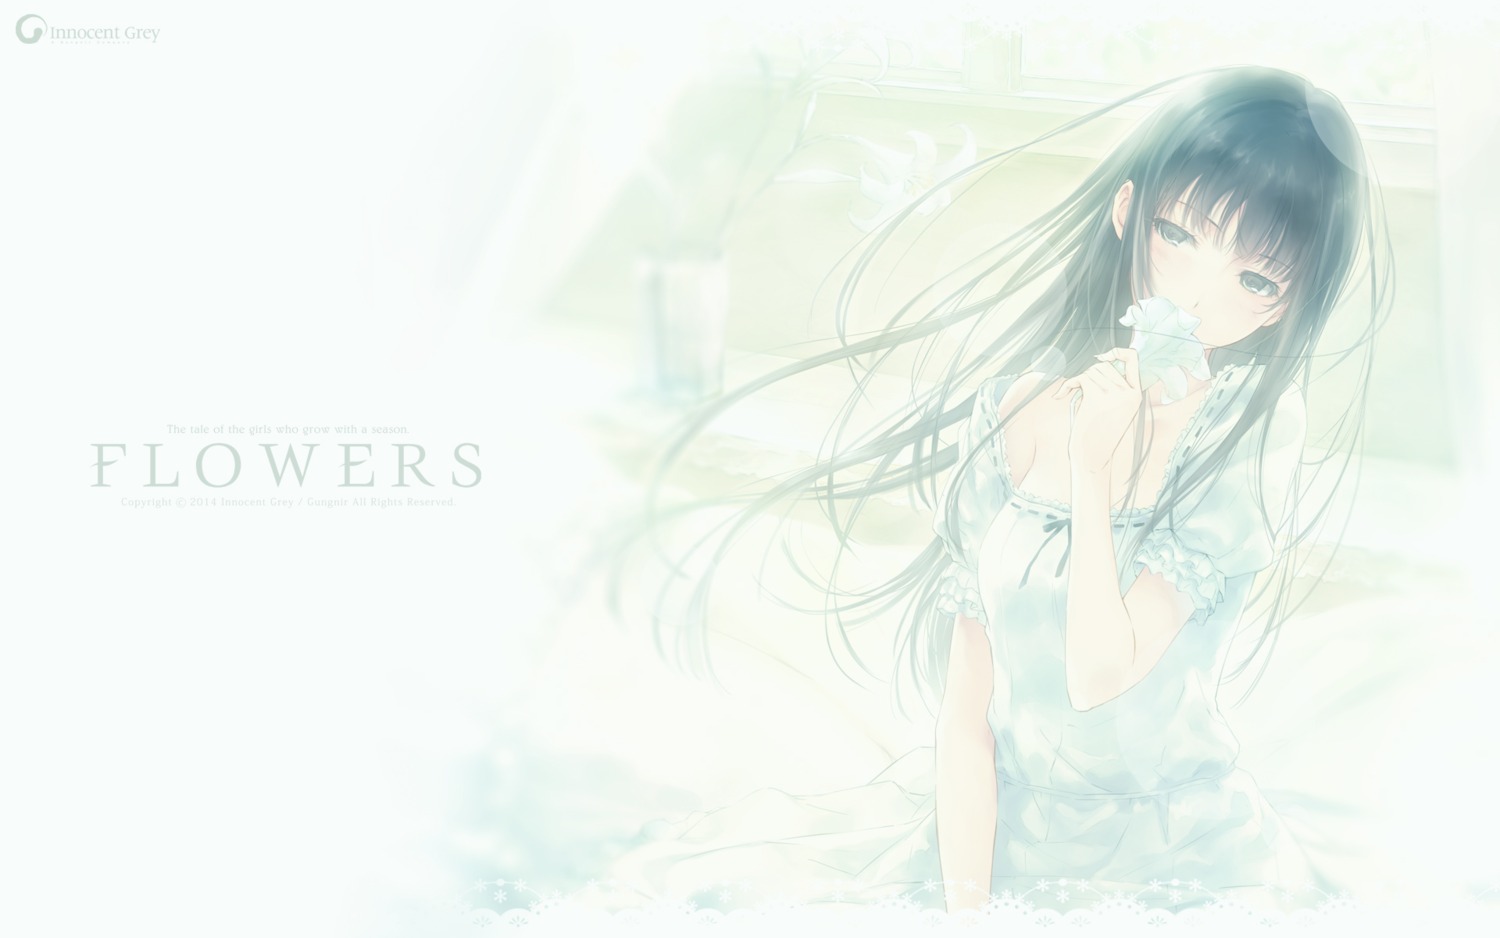 dress flowers innocent_grey shirahane_suou sugina_miki wallpaper